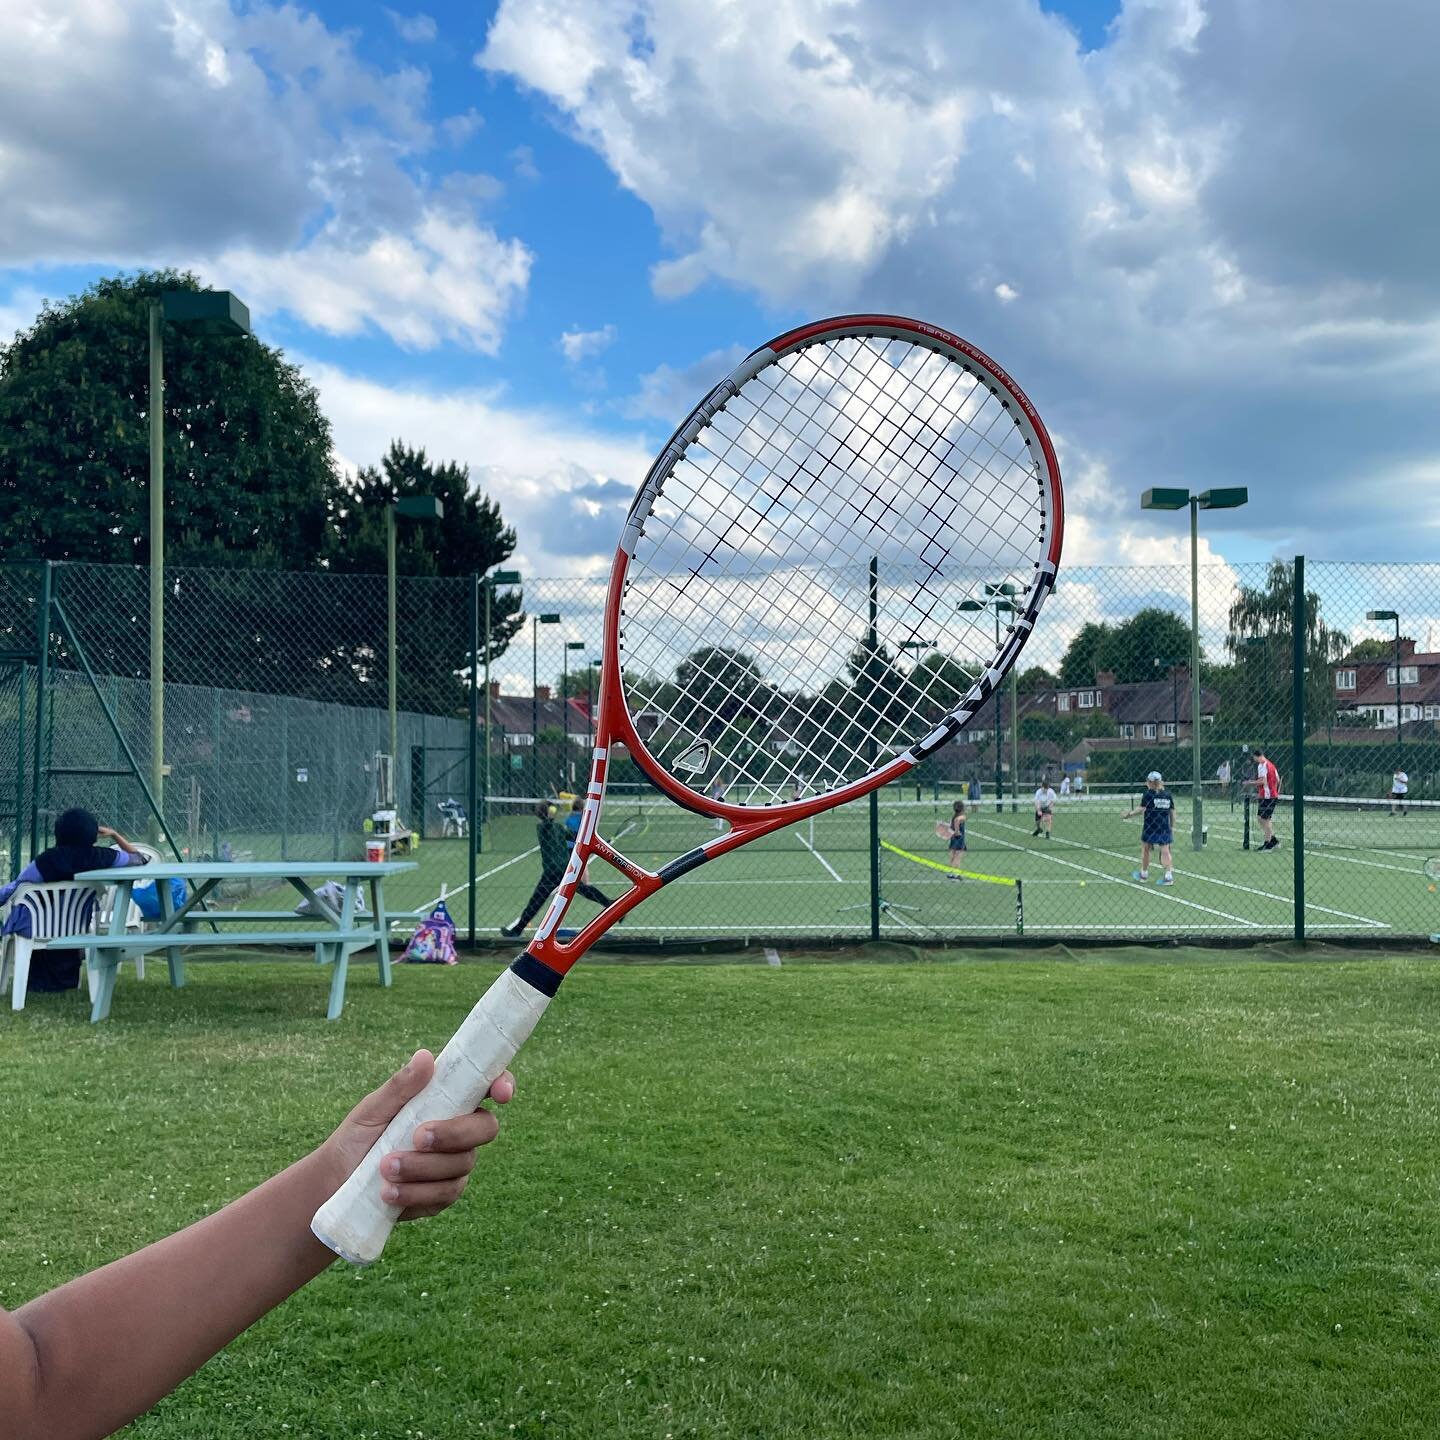 Time for tennis 🎾 #kidsclub @gunnersburytriangleclub